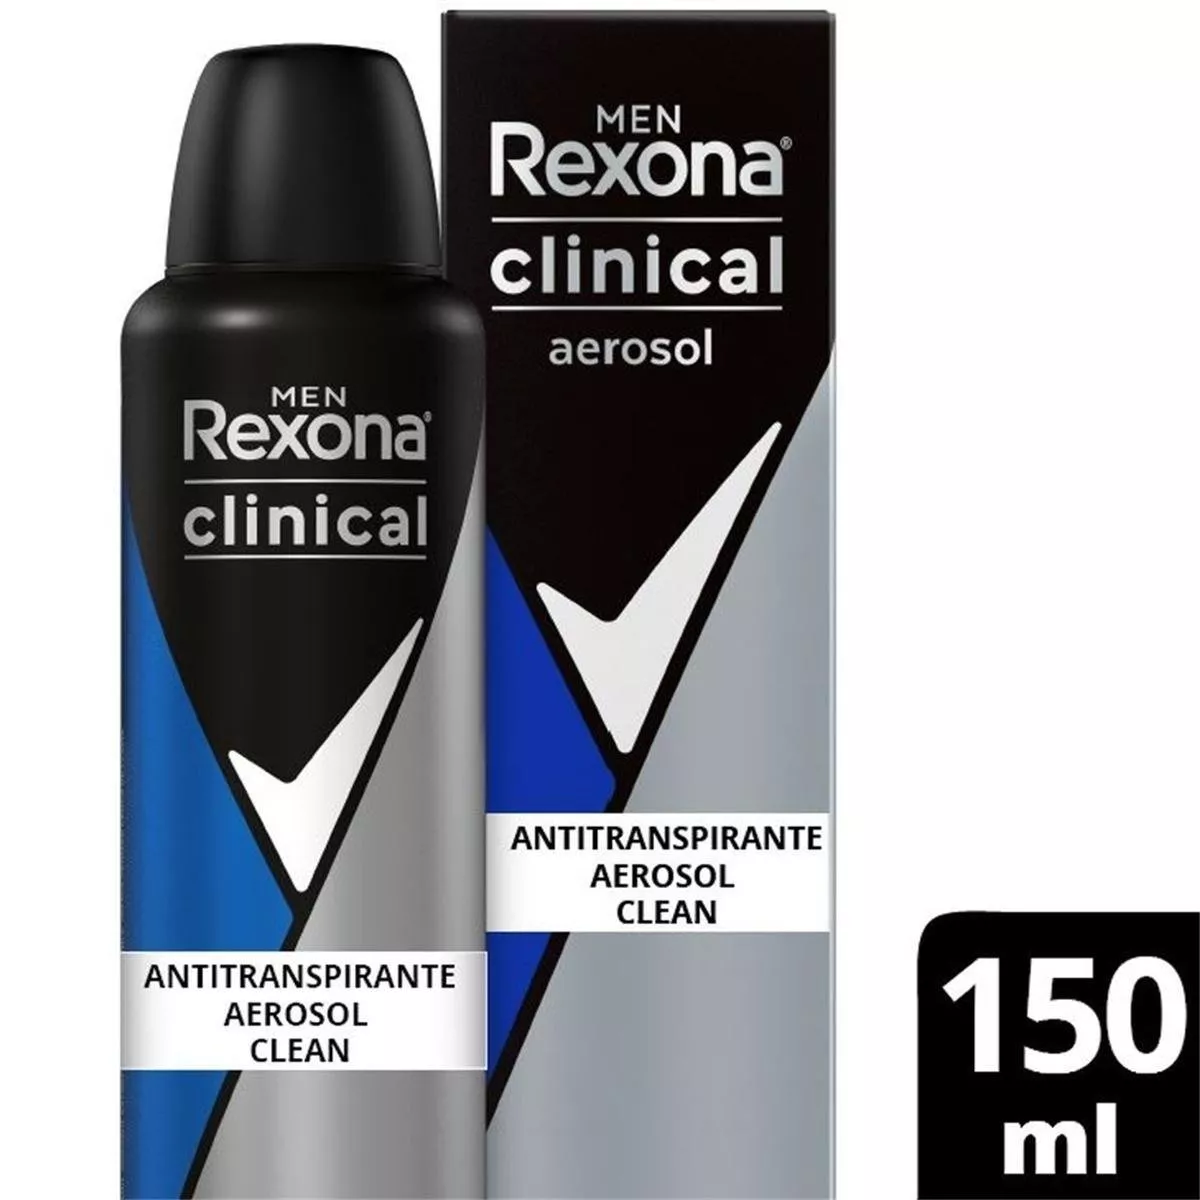 Antitranspirante Aerosol Rexona Men Clinical Clean 150ml Leve 3 Pague 2